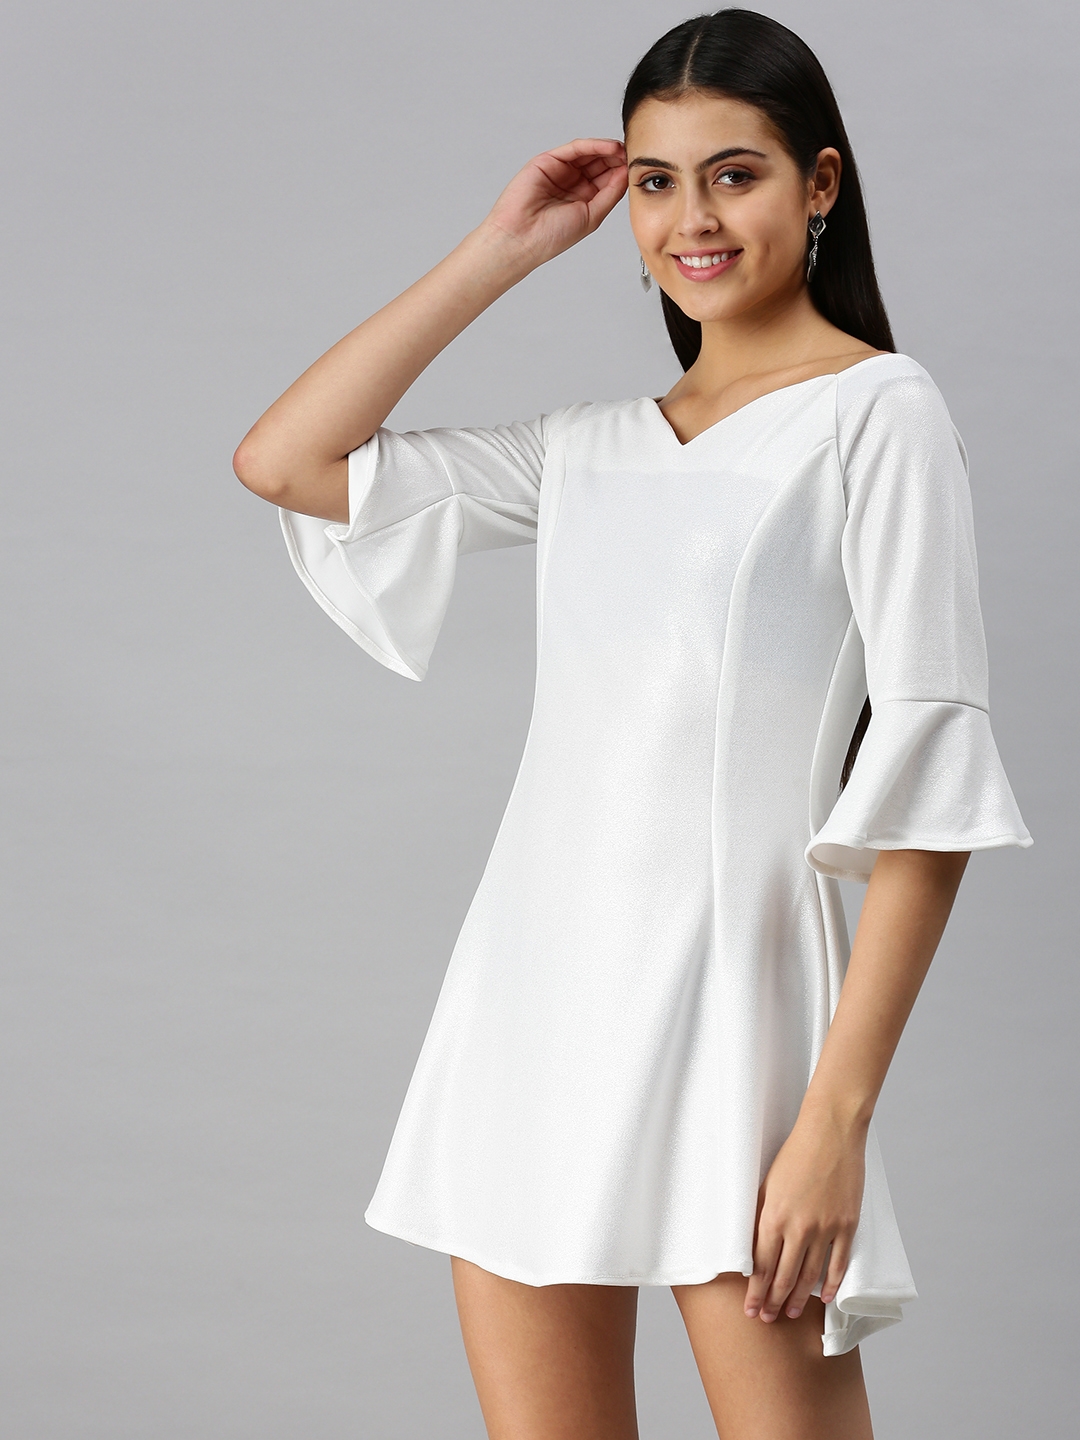 Showoff | SHOWOFF Women's Fit and Flare Off-Shoulder White Solid Dress 1